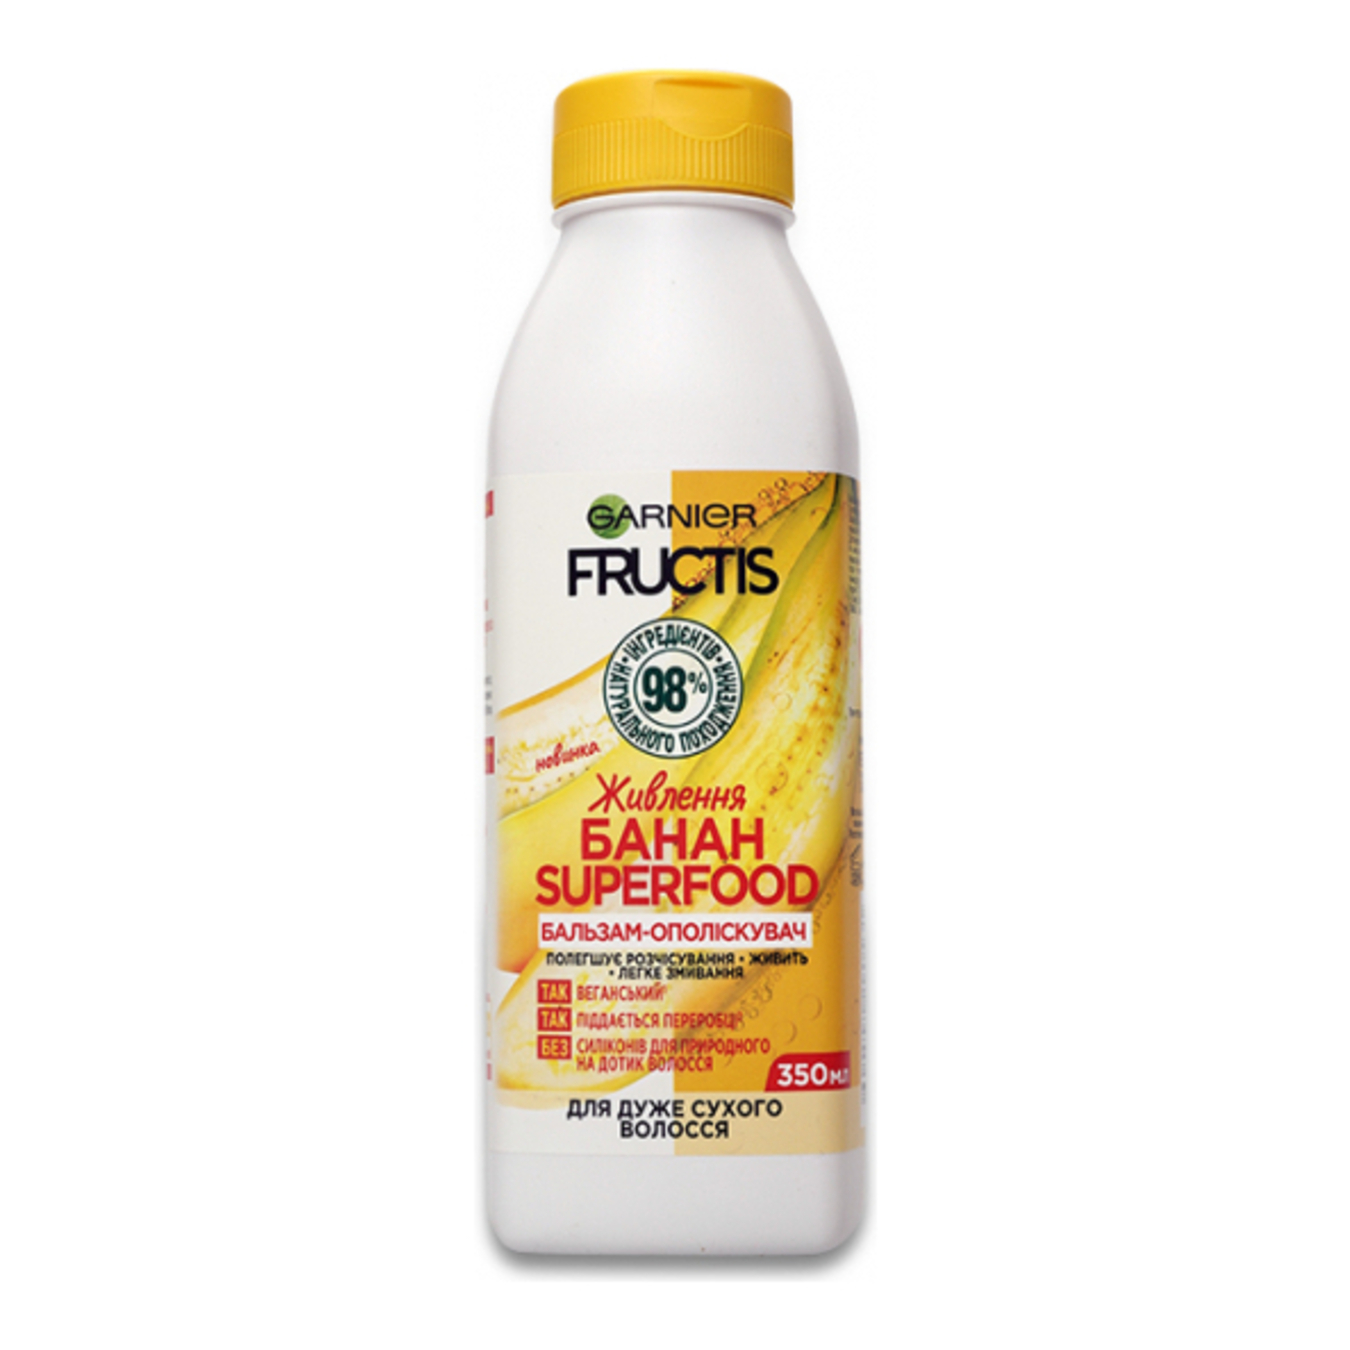 Garnier Fructis Banana Superfood Nourishing For Dry Hair Balsam-Conditioner 350ml